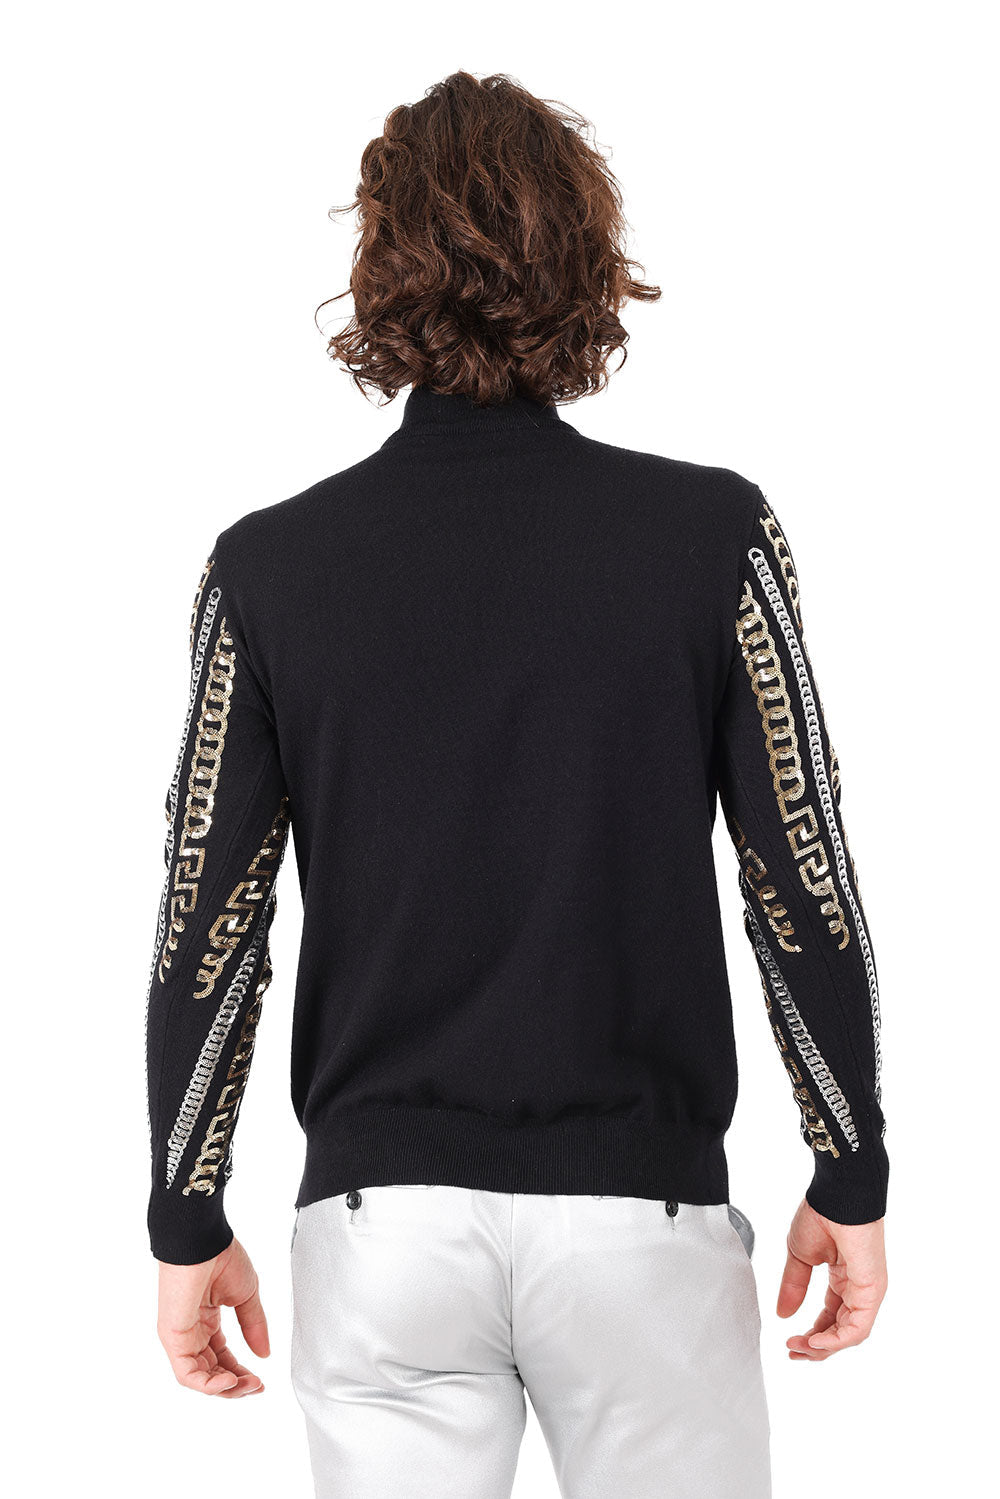 Barabas Men's Metallic Chain Long Sleeve Turtleneck Sweater 2LS2104 Black Gold